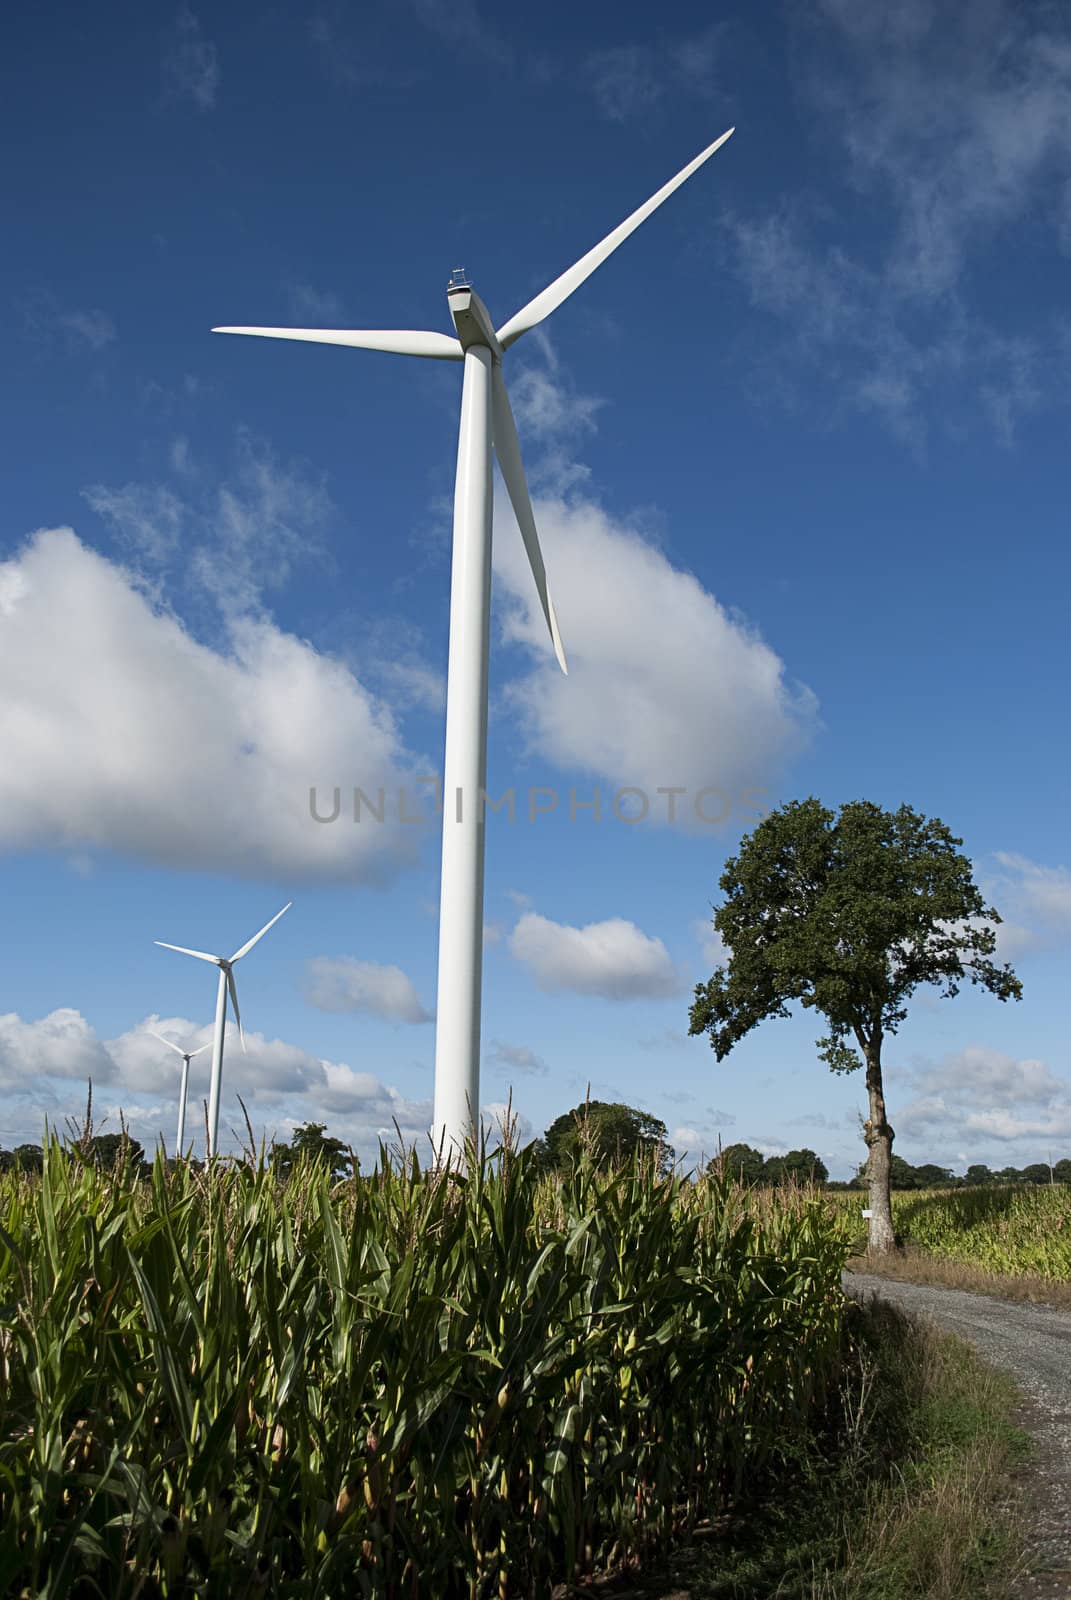 Wind turbine on country road 2 by zebra31